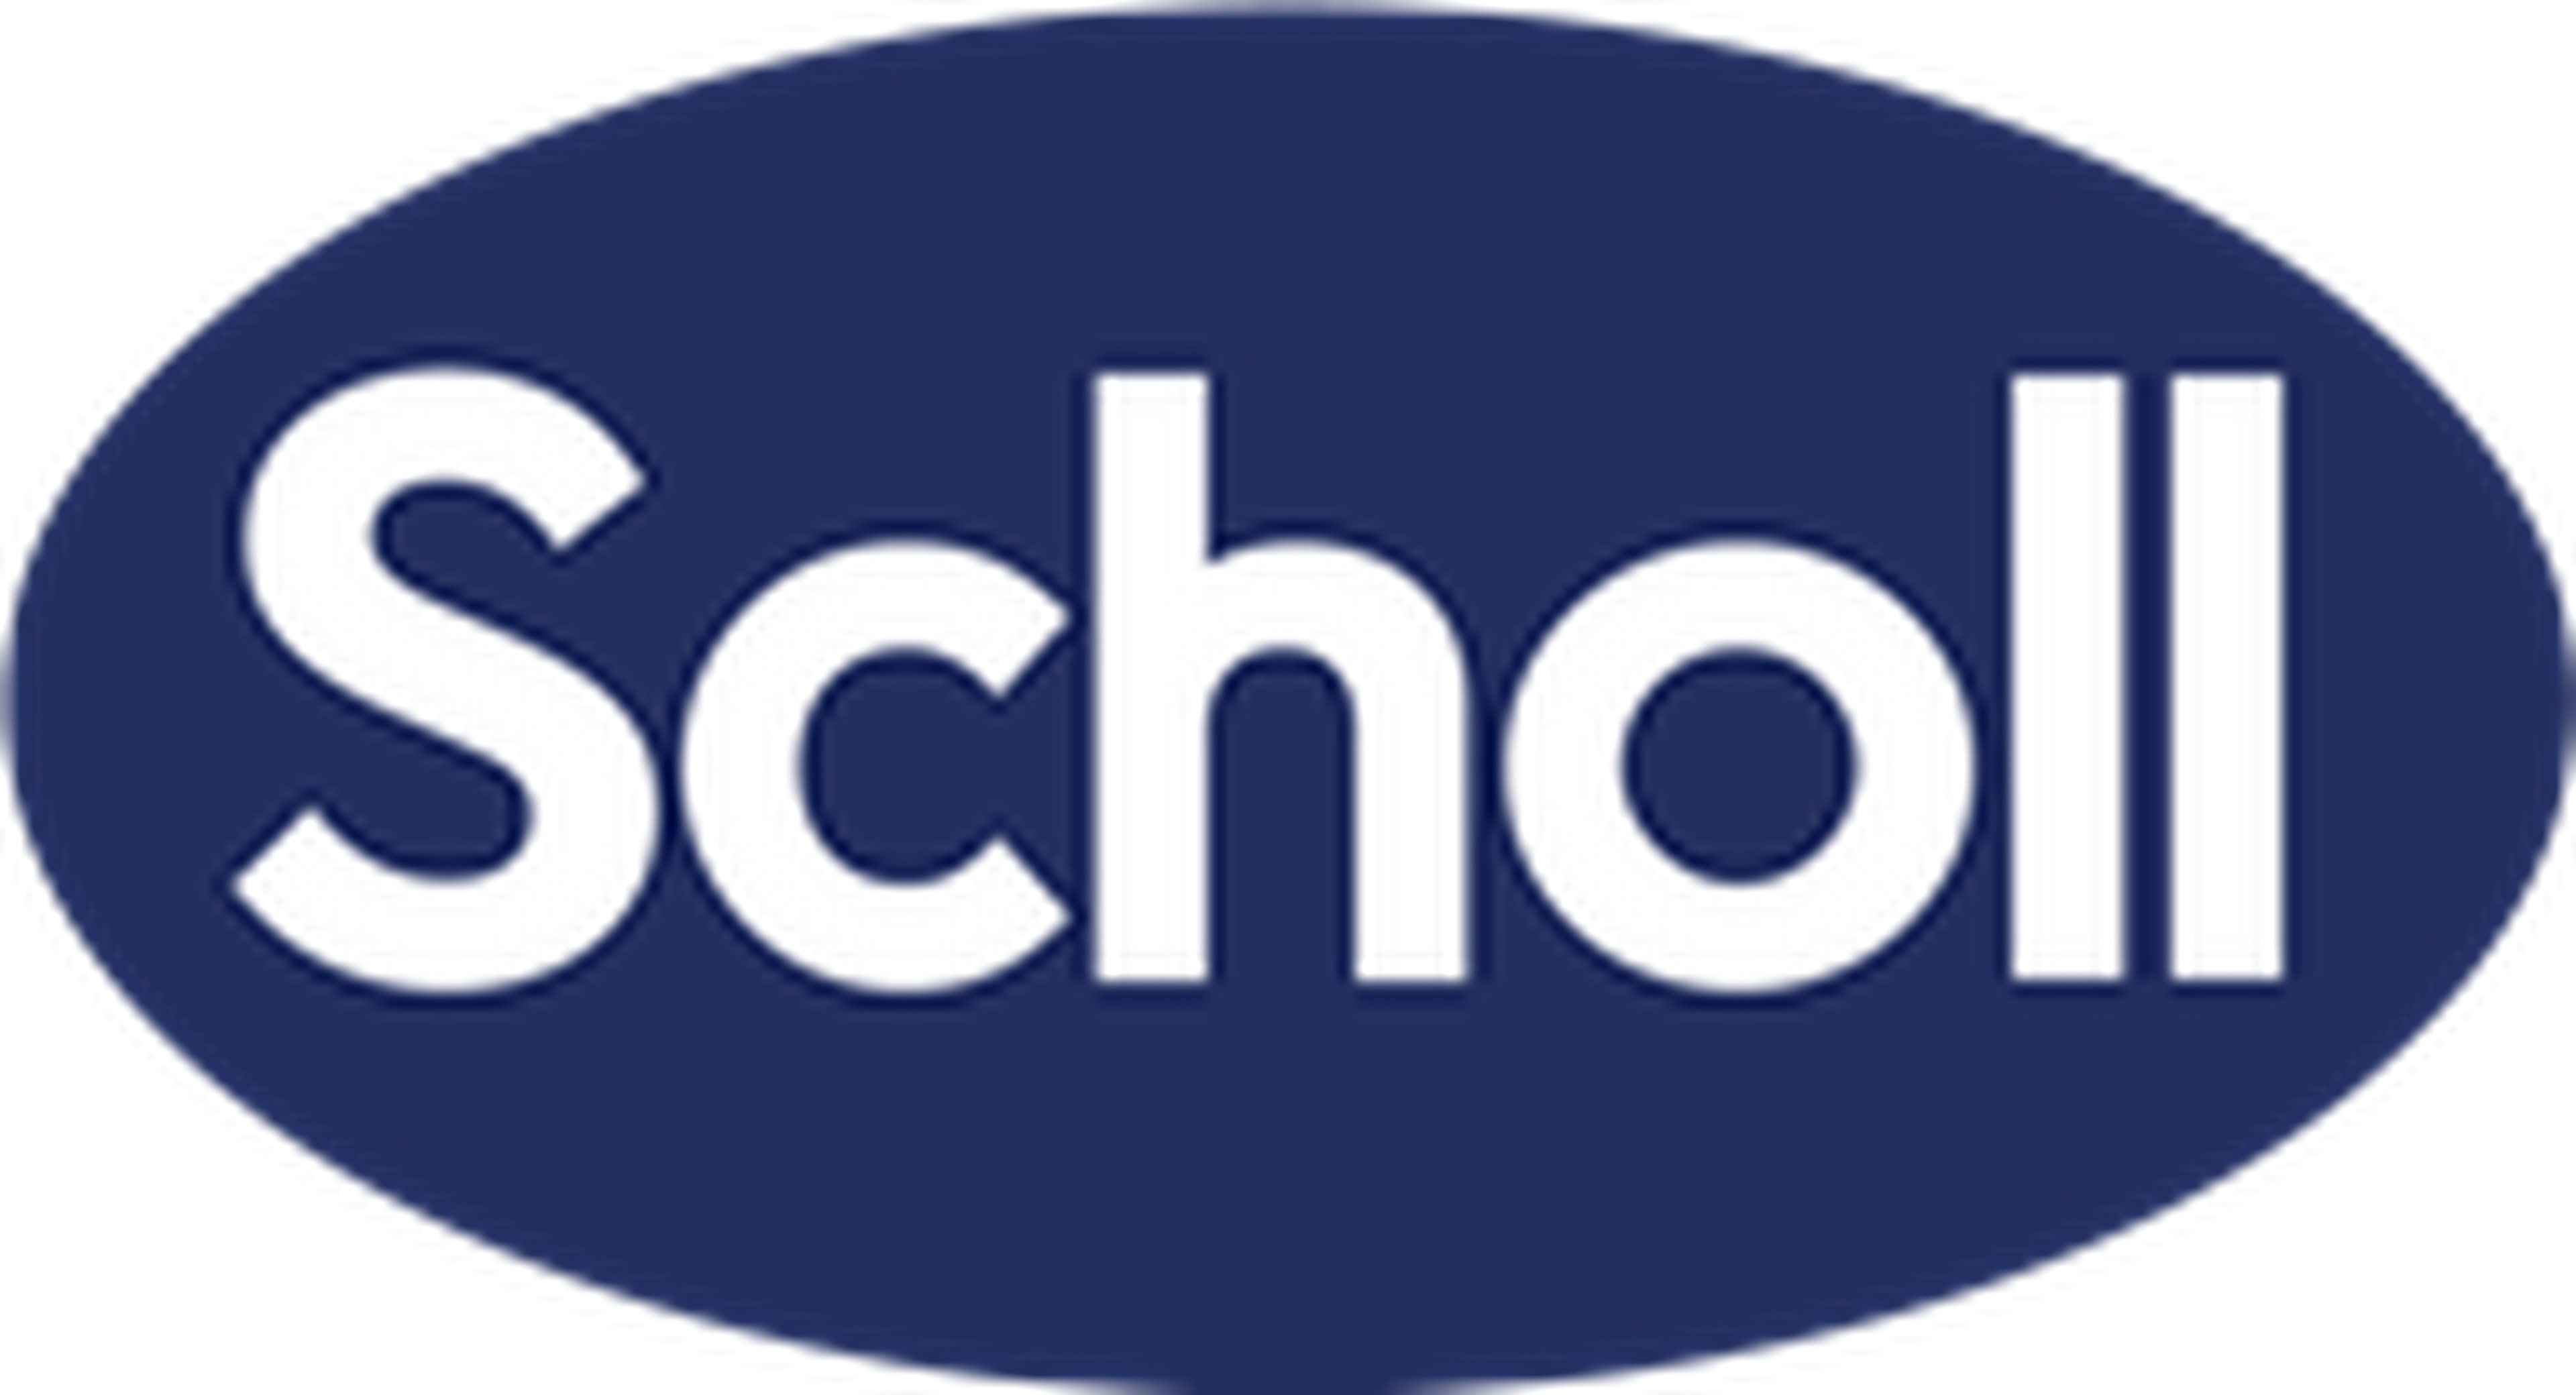 Scholl logotype